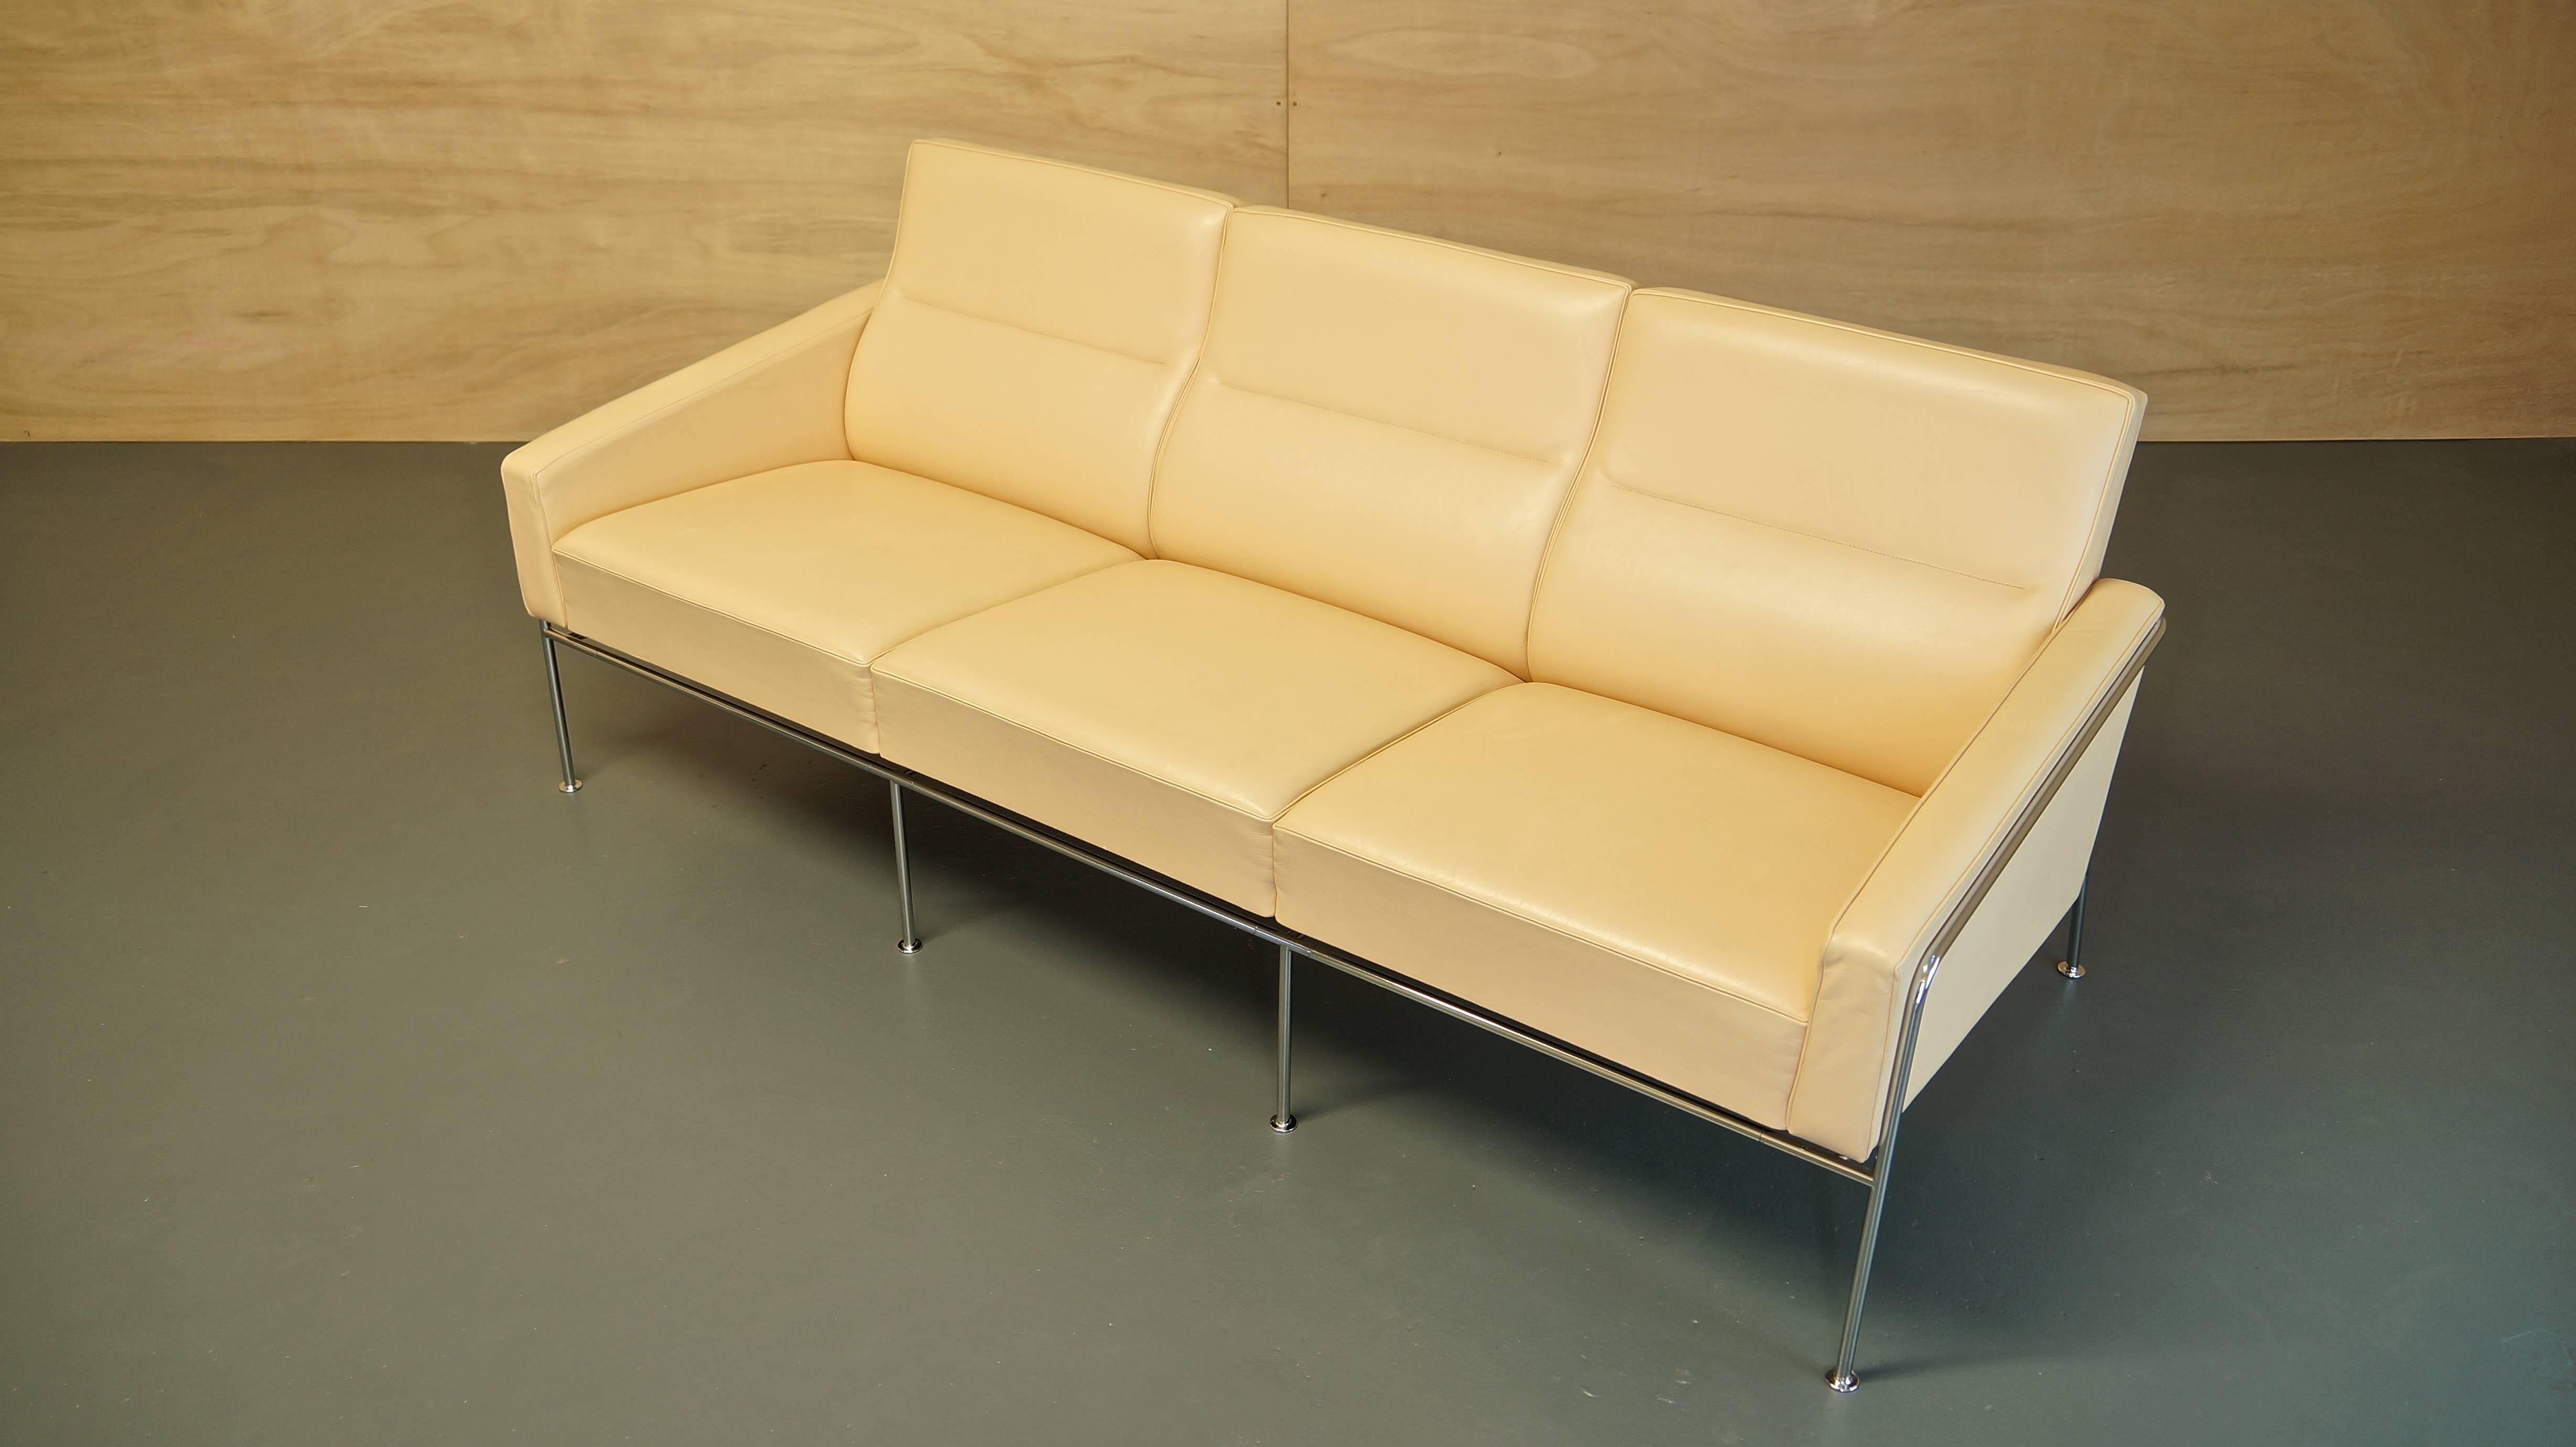 Steel Danish Vintage Arne Jacobsen Series 3303 Leather Sofa by Fritz Hansen